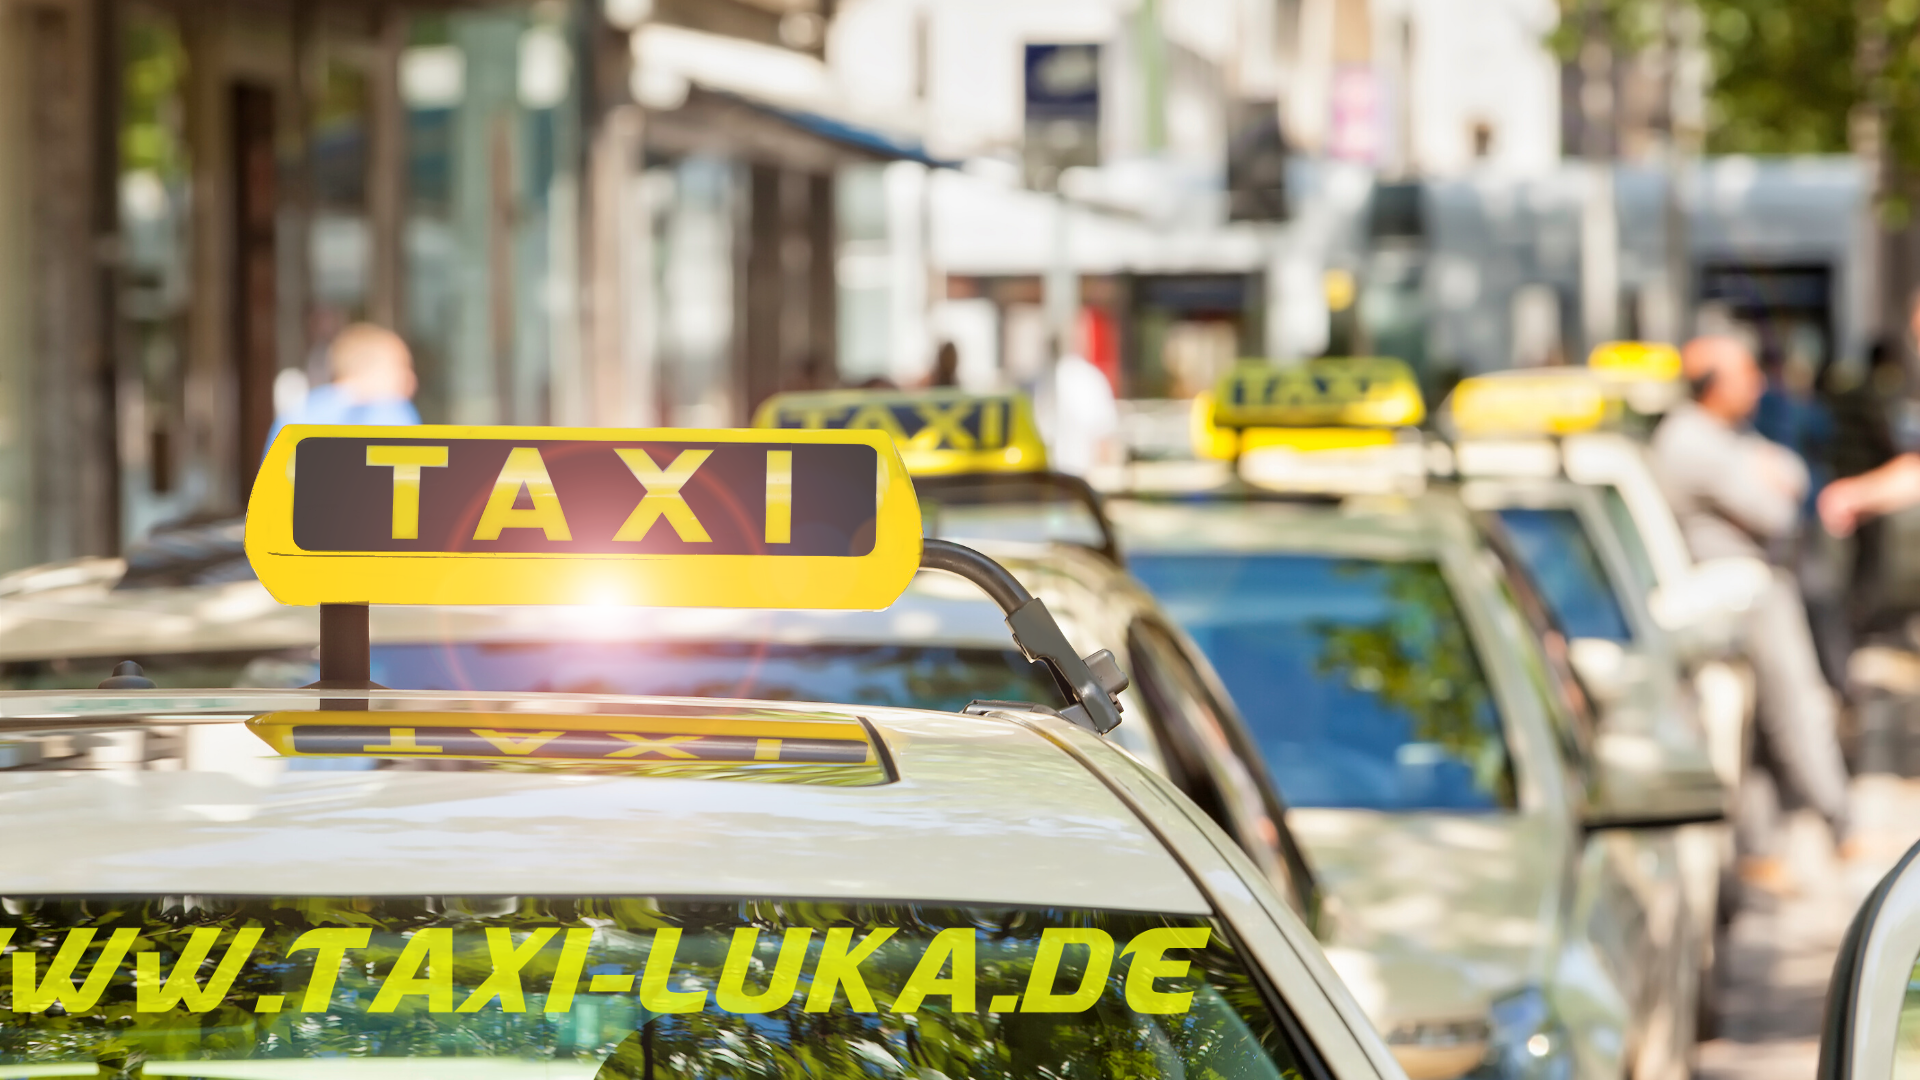 (c) Taxi-luka.de